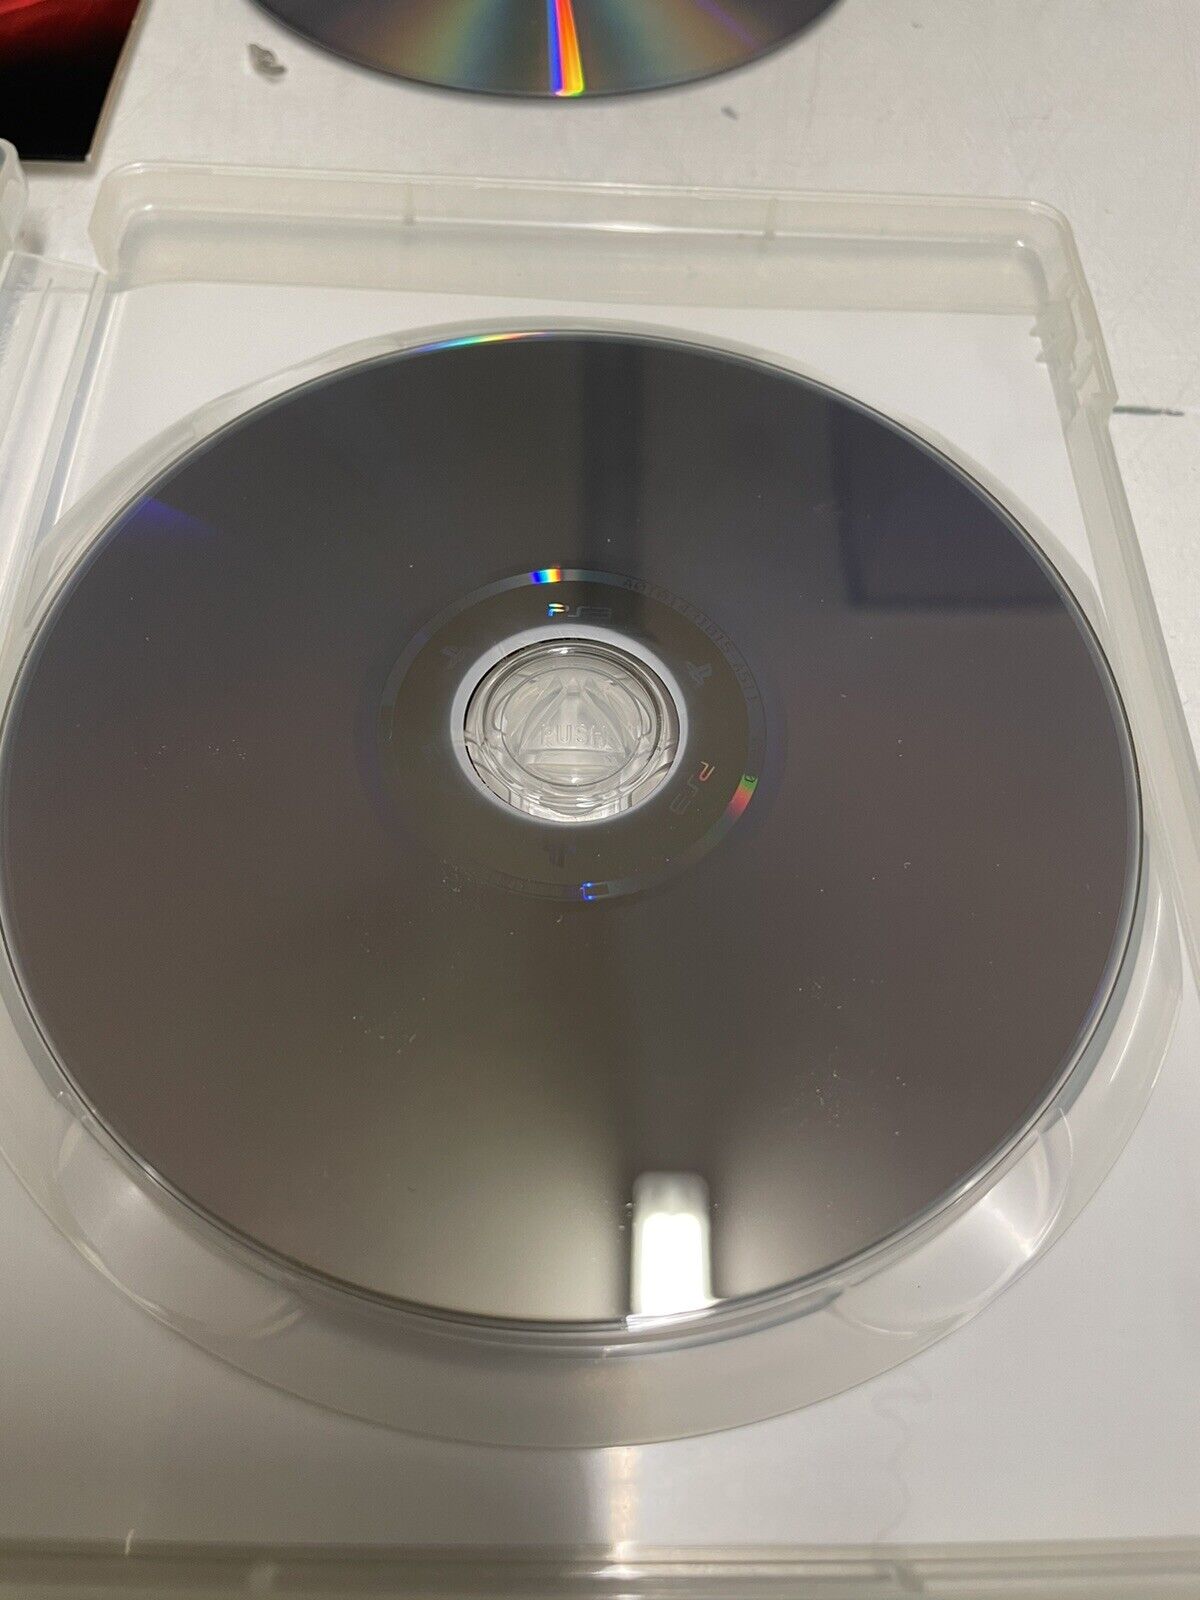 Ps3-Playstation-Assassins-Creed-2-Pal-ita-DVD-Artbook-Bundle-144834335614-4